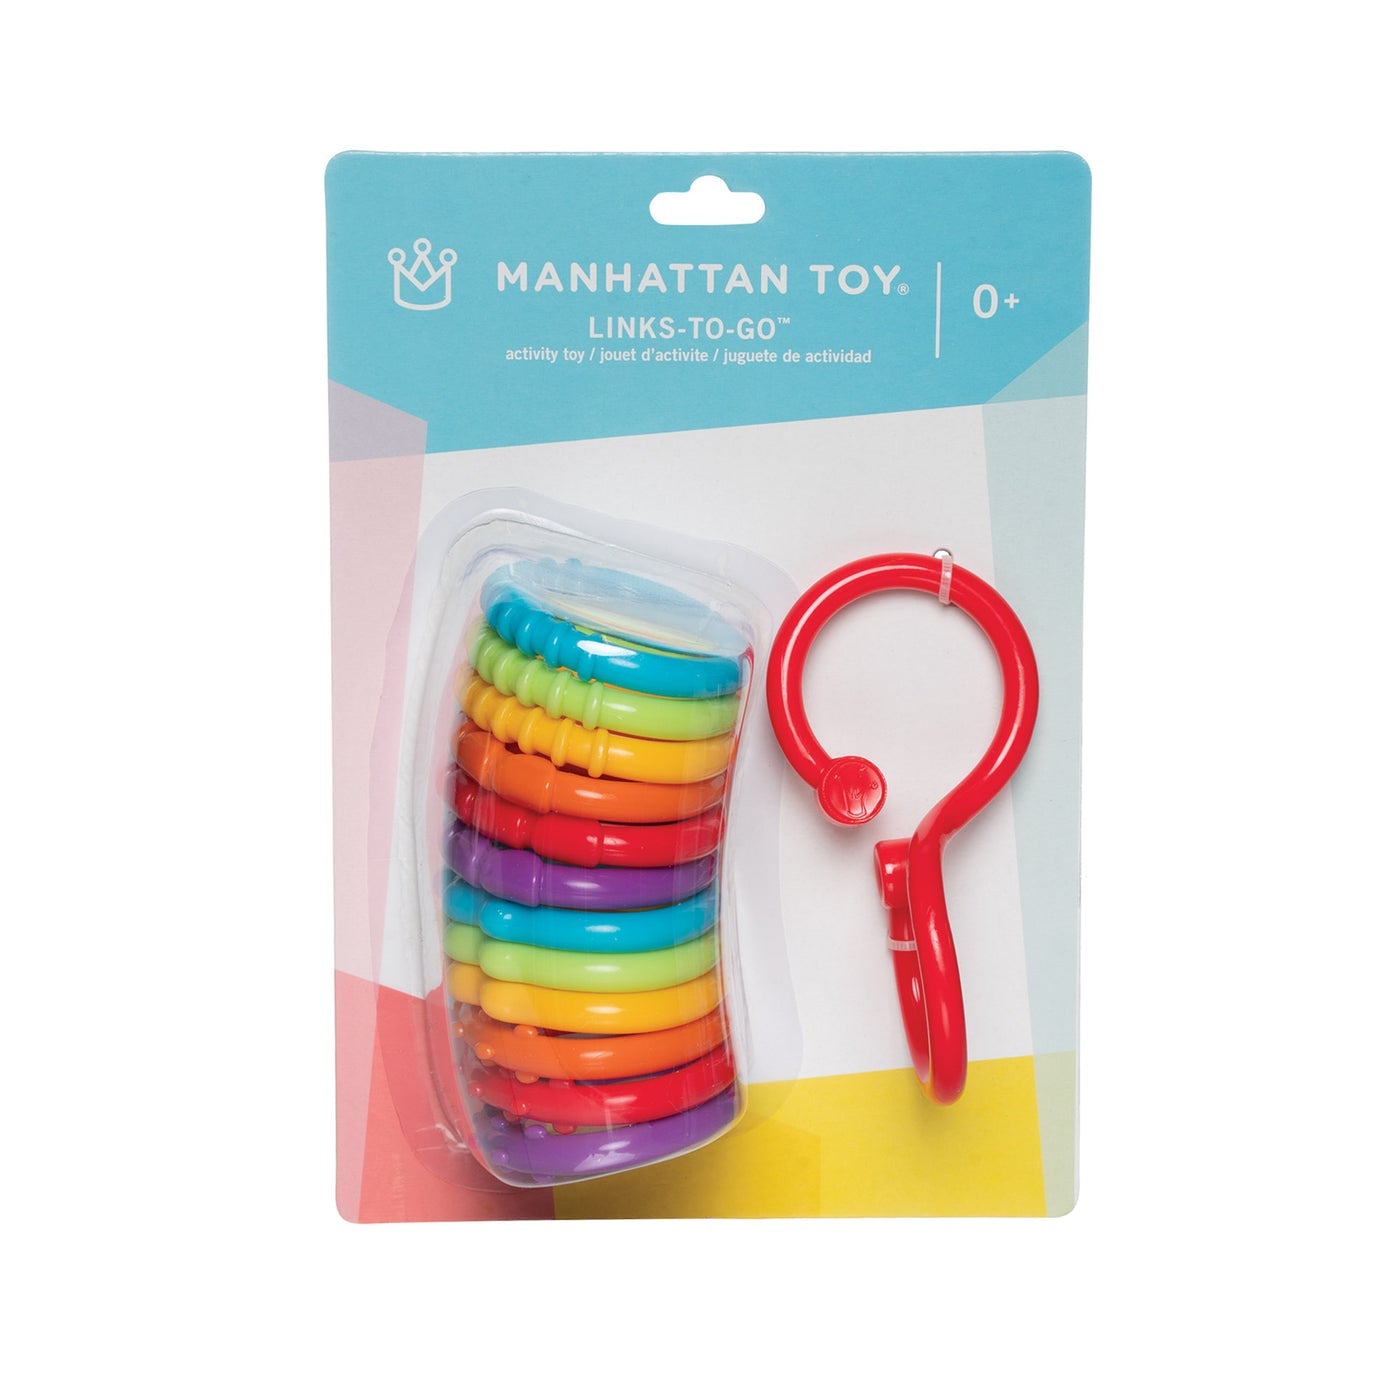 Manhattan Toy -- Links-to-Go